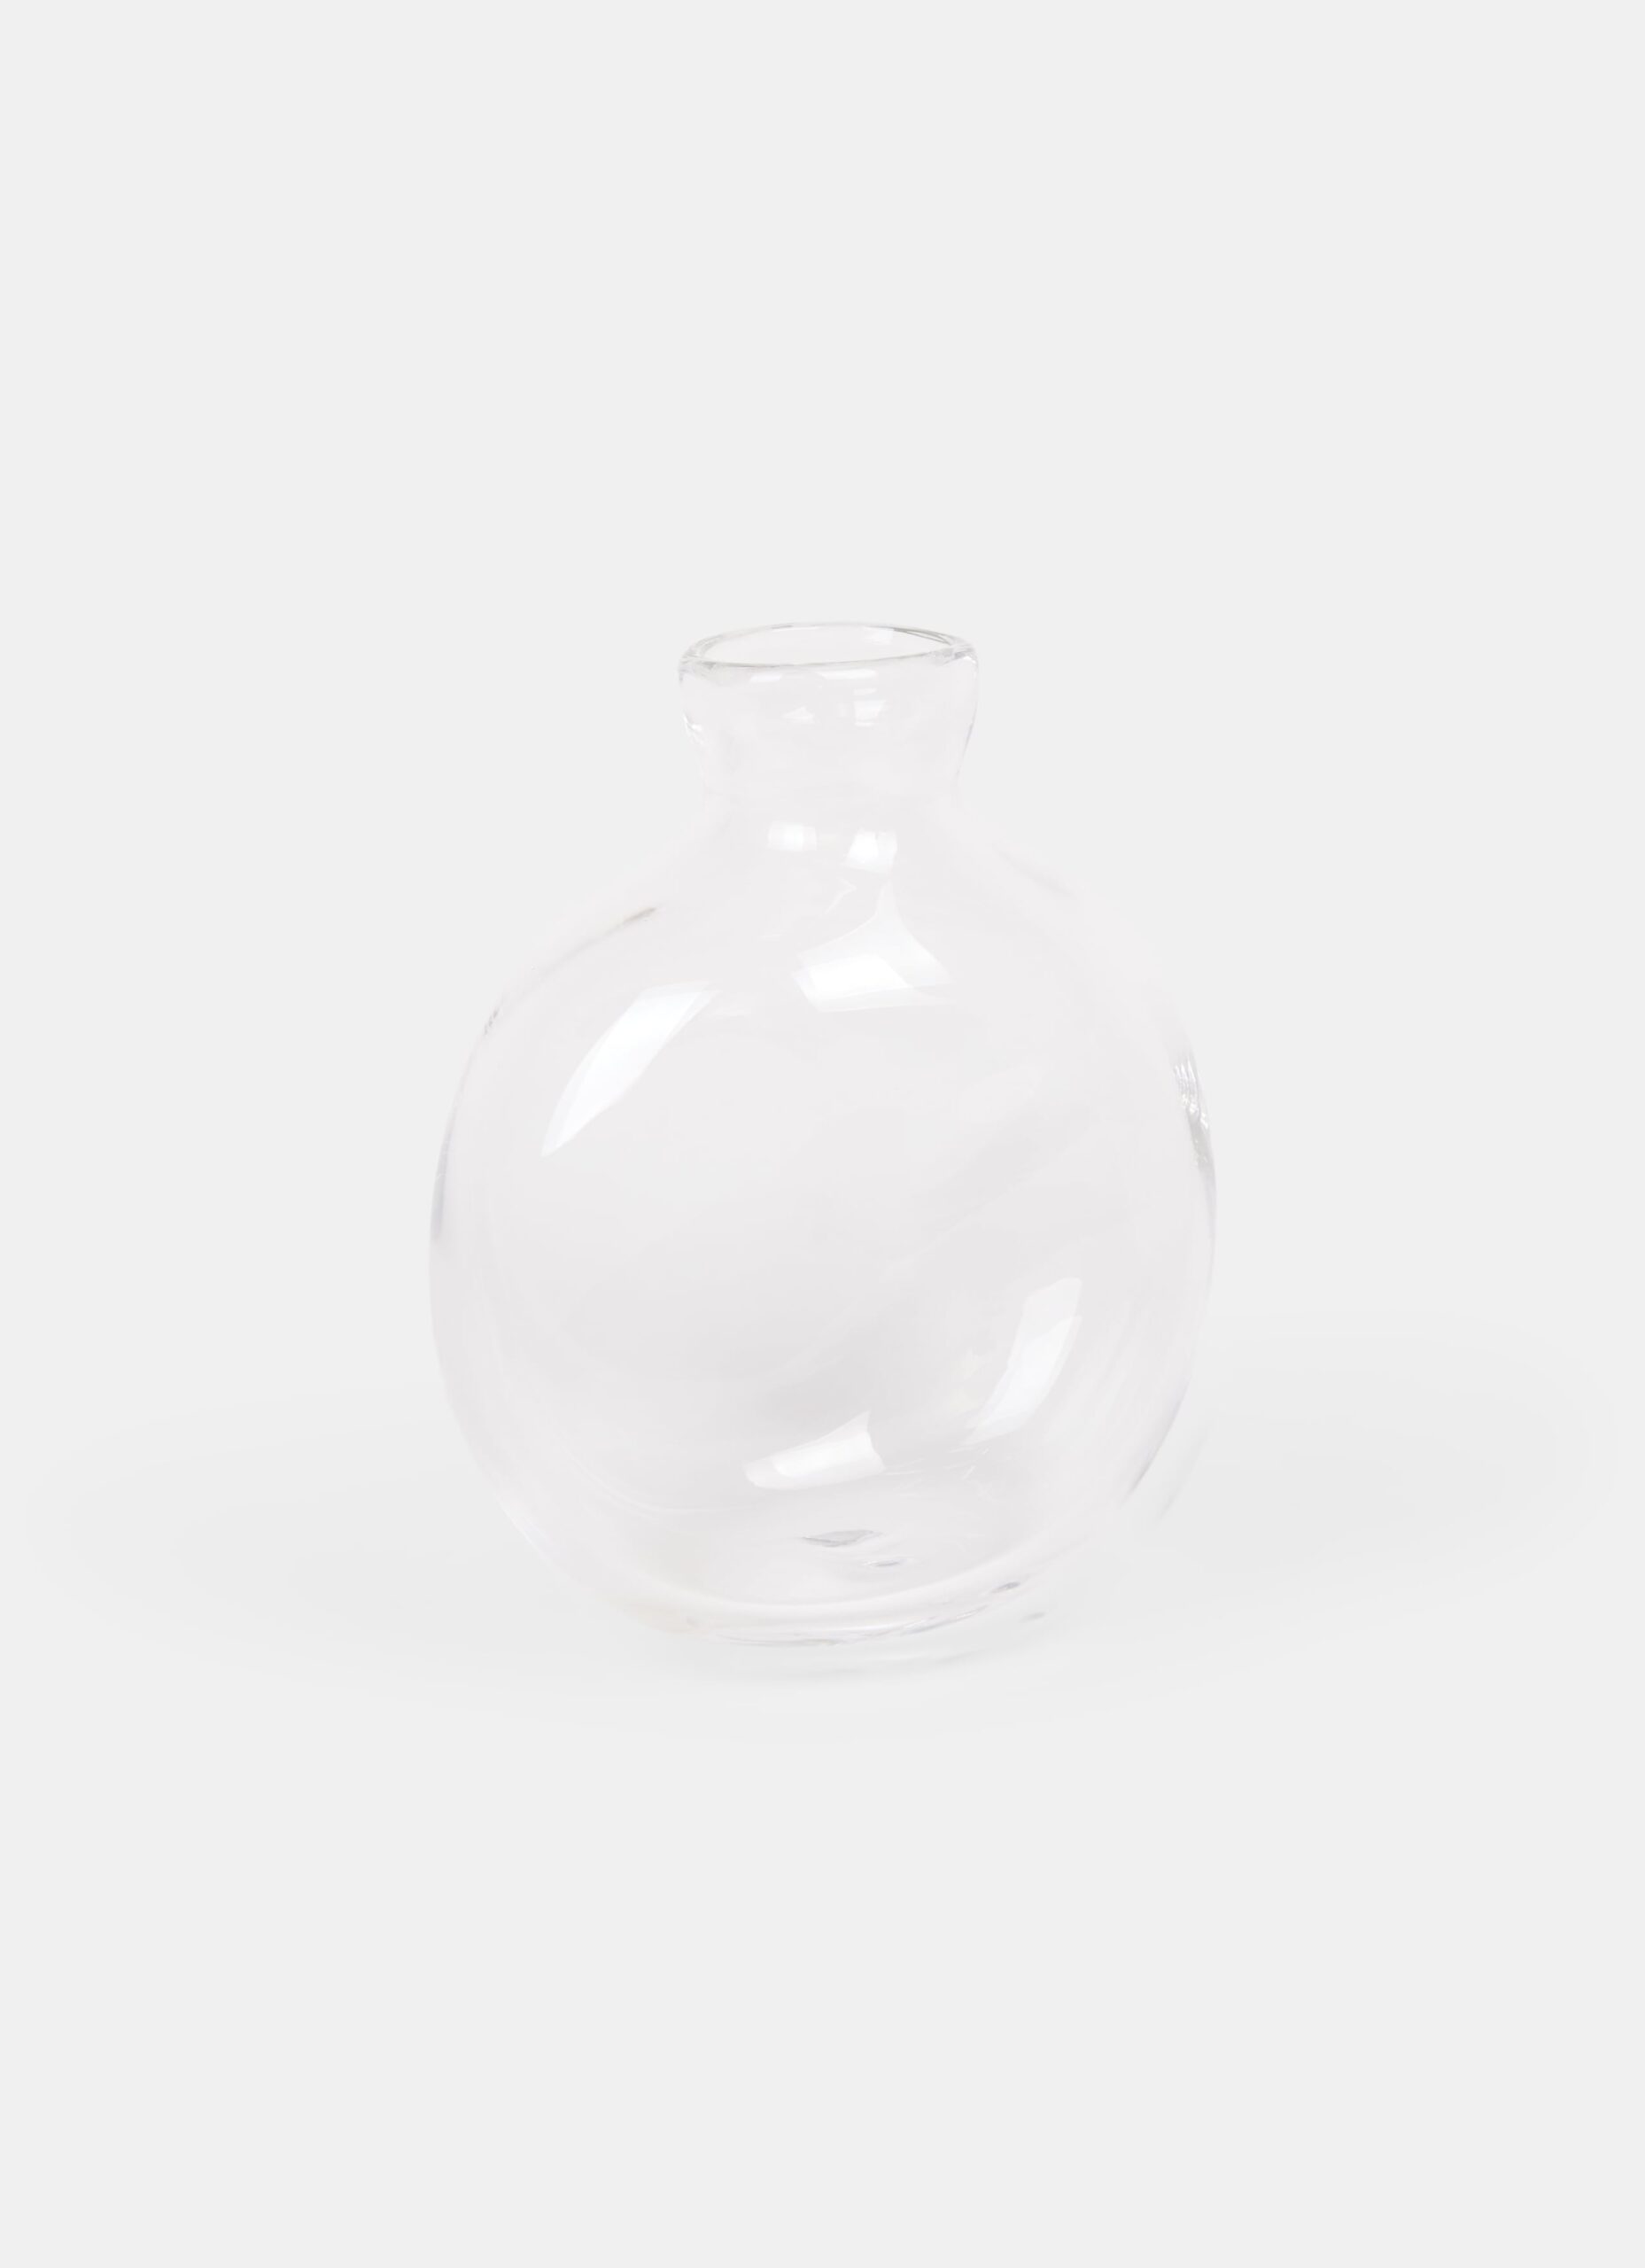 Frama - Studio 0405 - Stem Glass - Limited edition - Bottle - Round